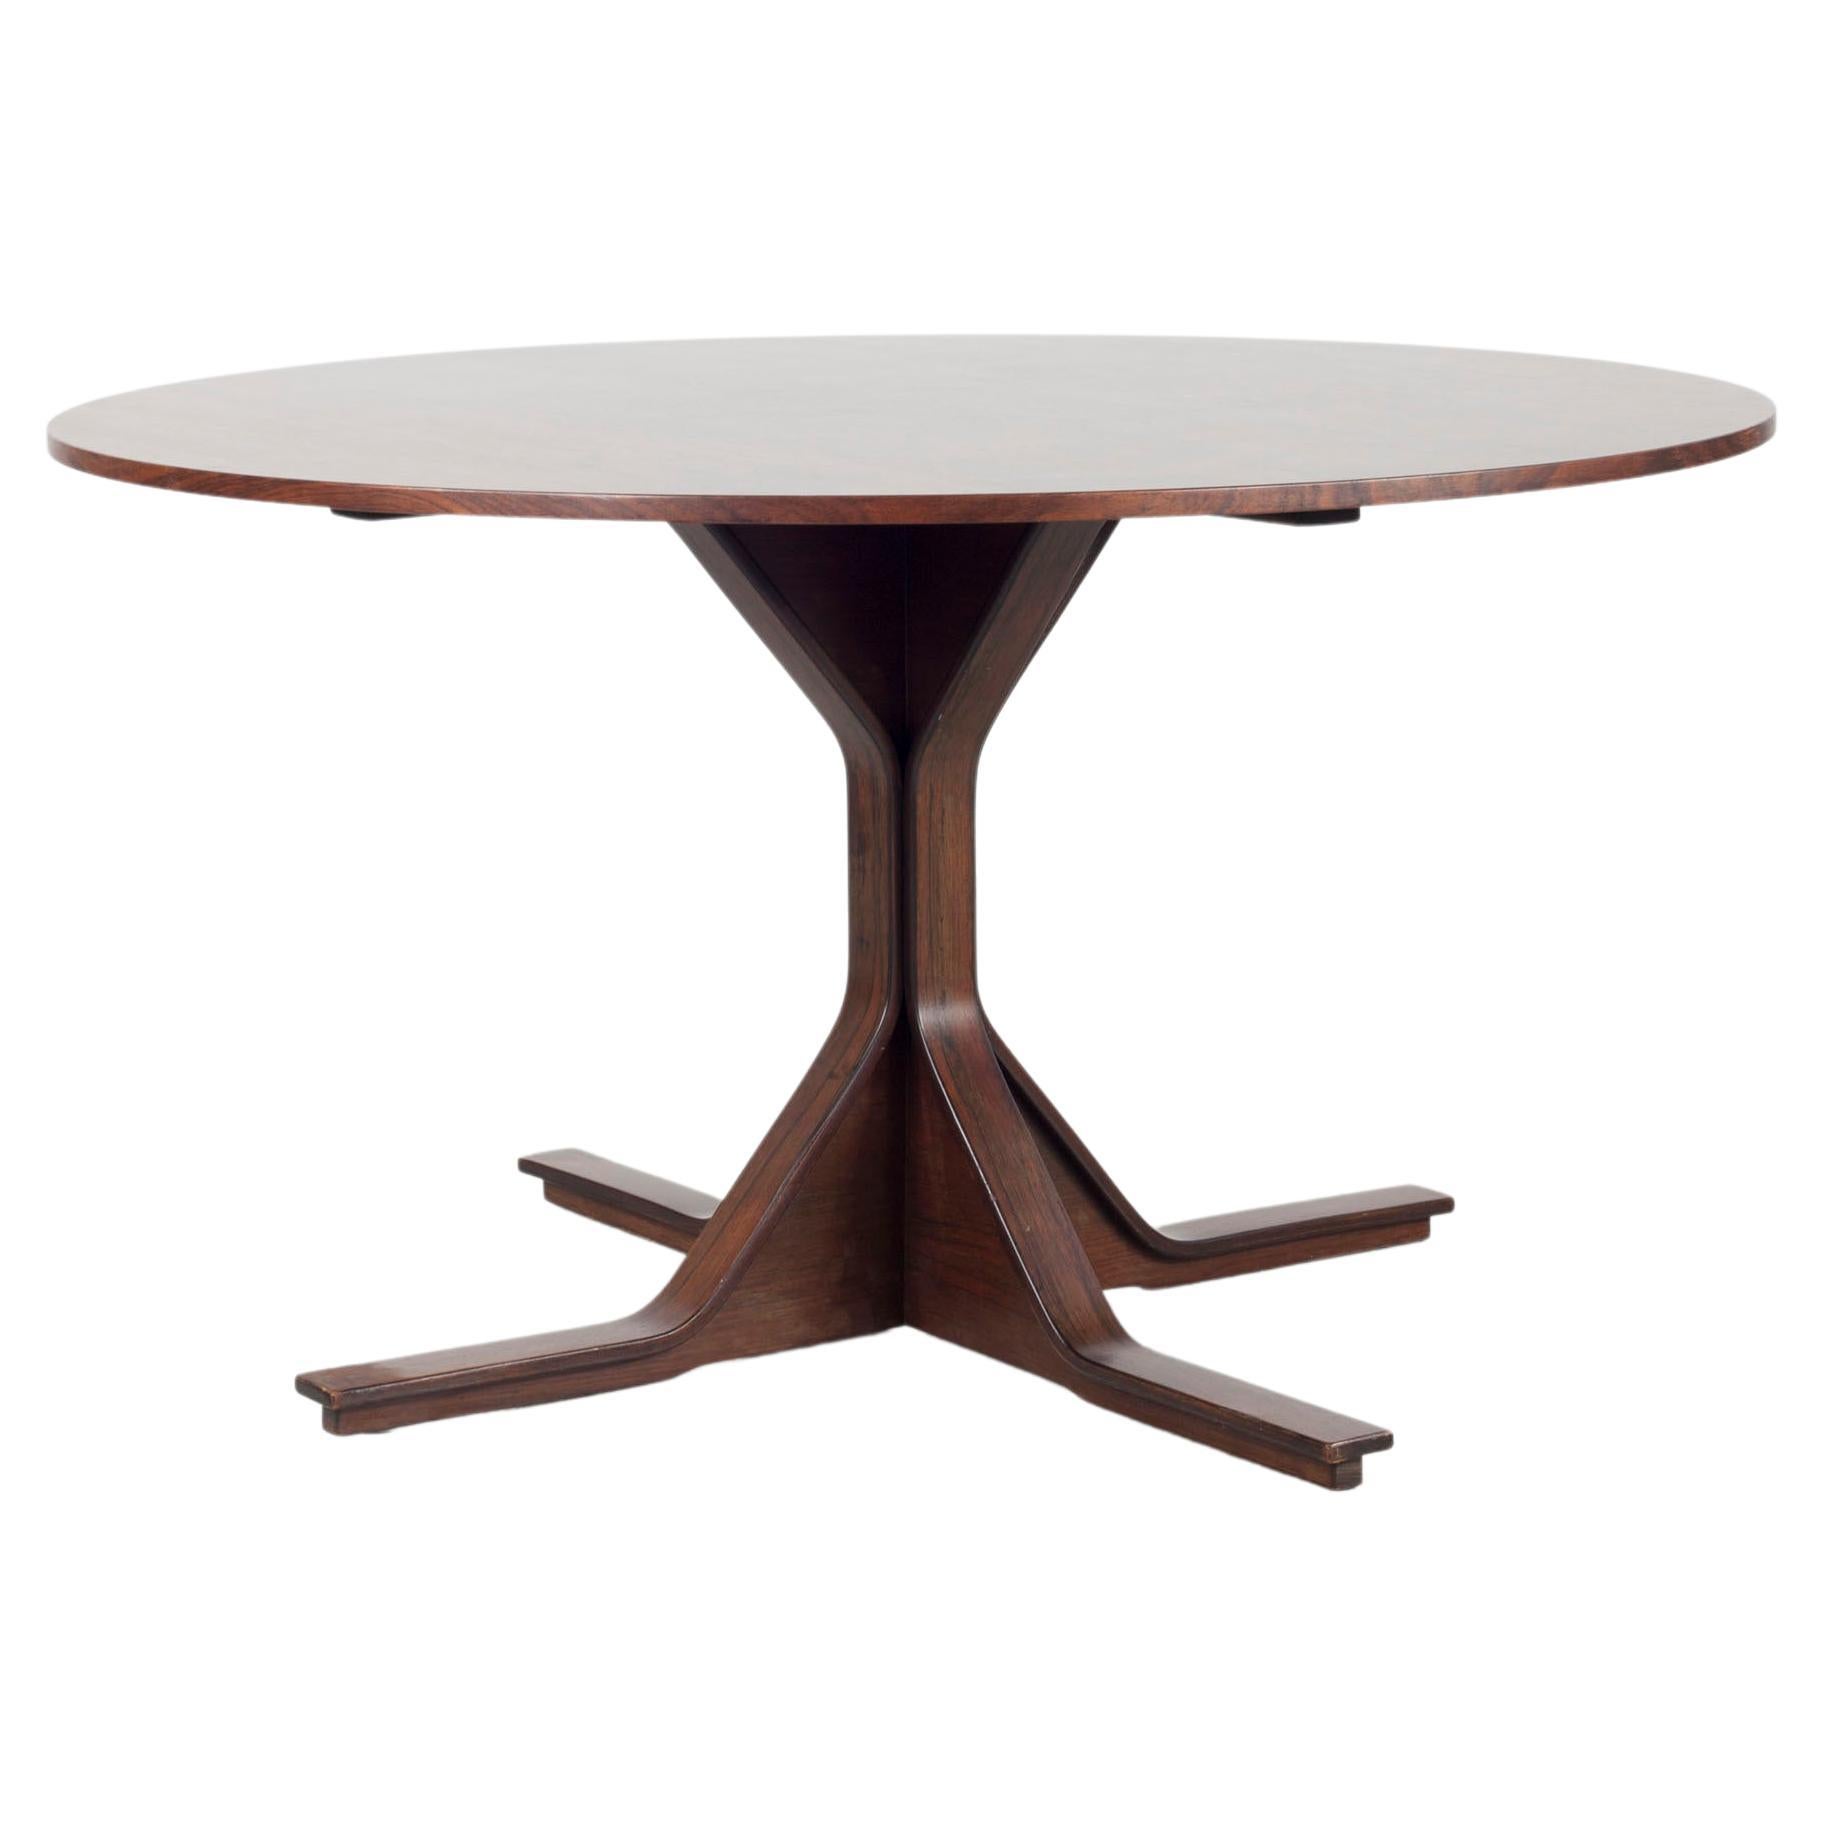 Circular Table, "Model 522", Gianfranco Frattini for by Bernini, Italy. 1960